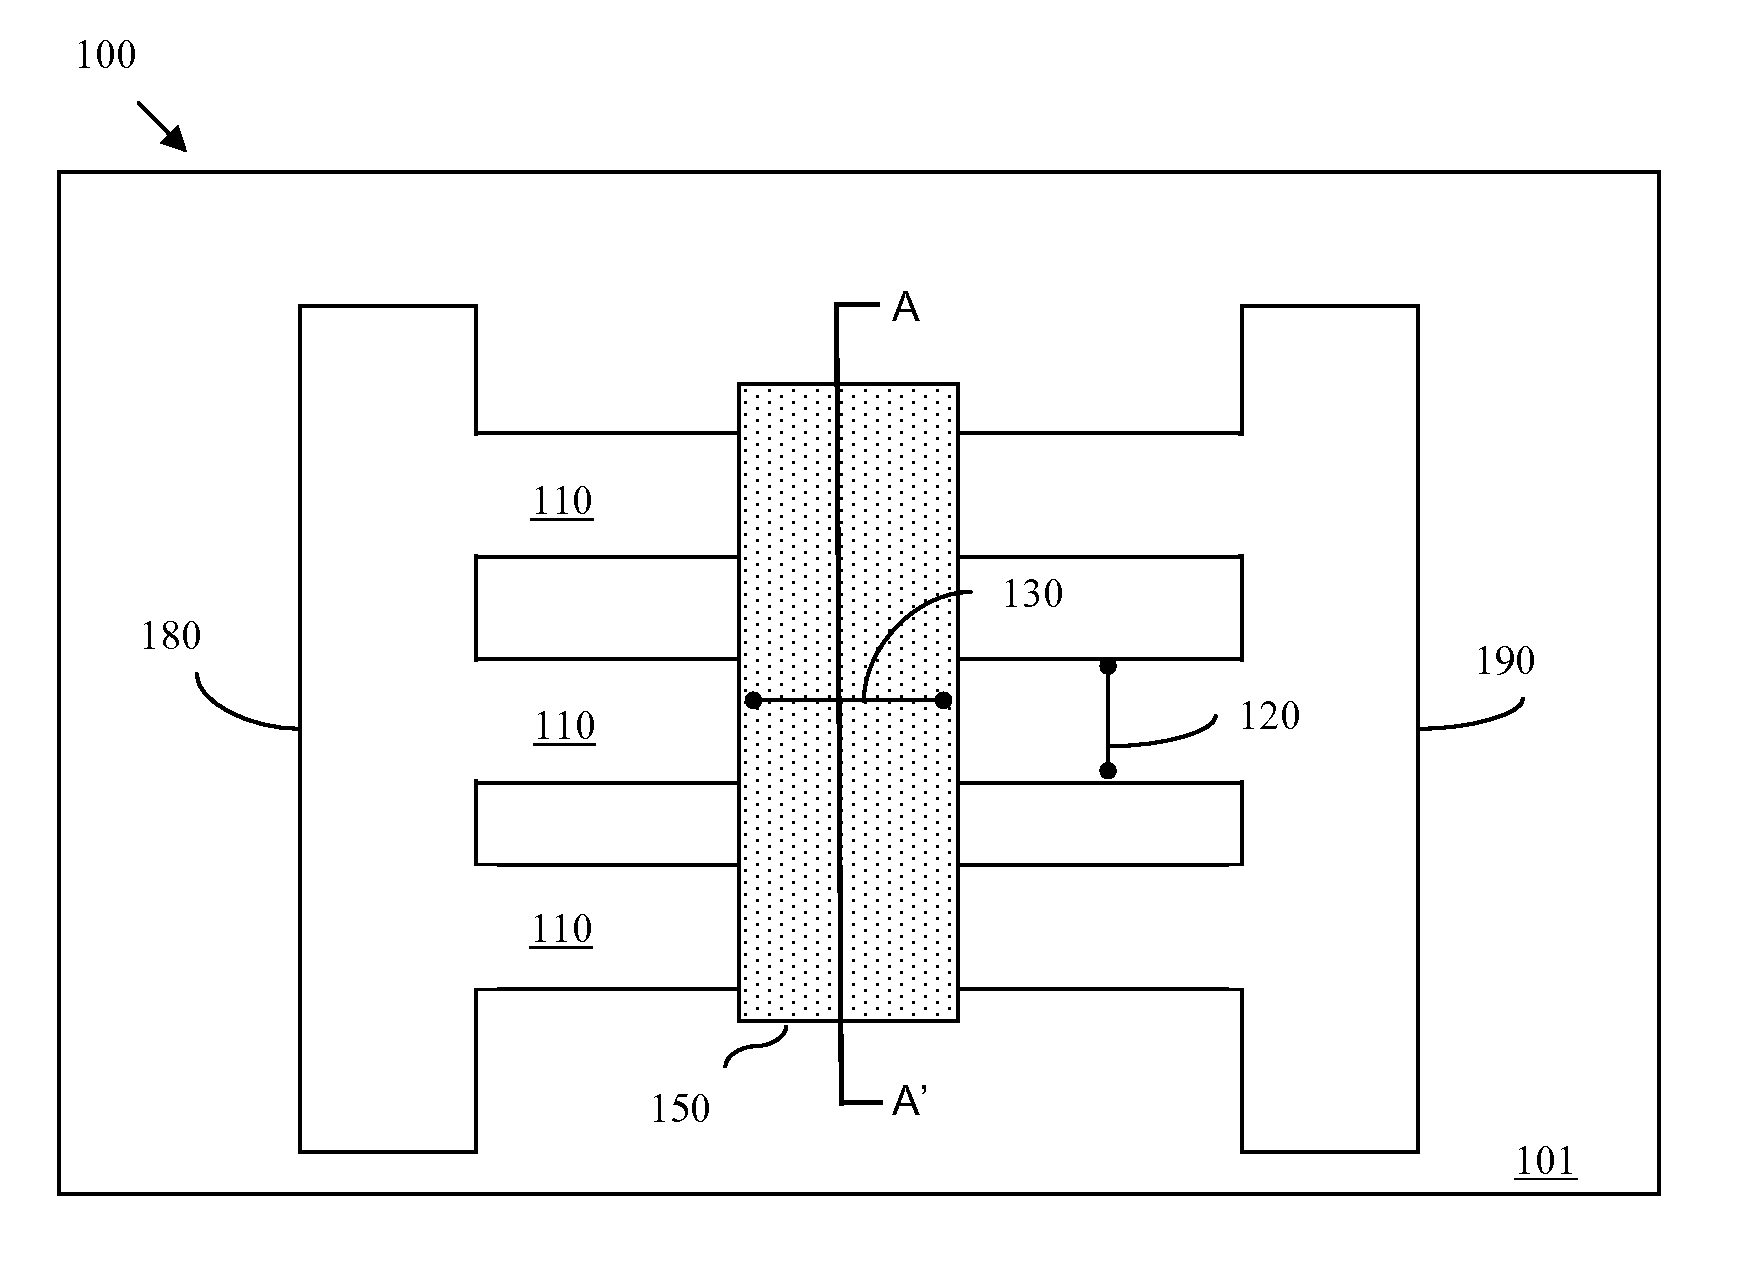 Multi-fin multi-gate field effect transistor with tailored drive current